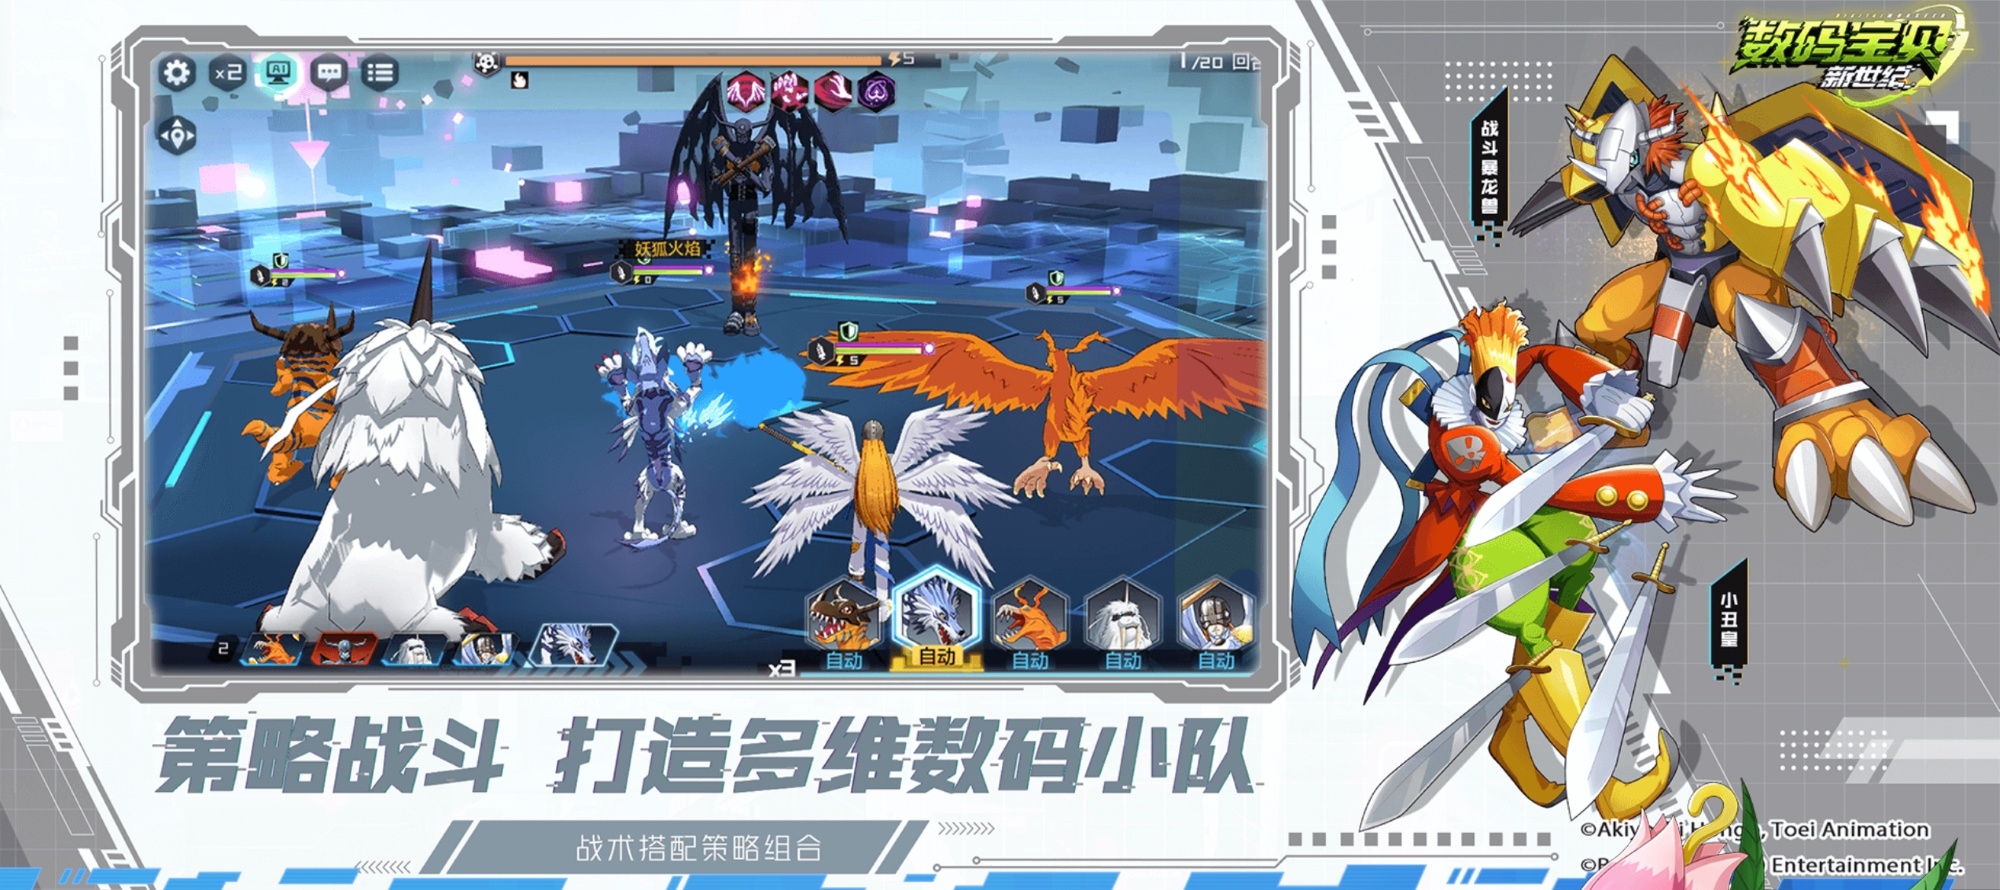 Digimon New Century Combat Feature